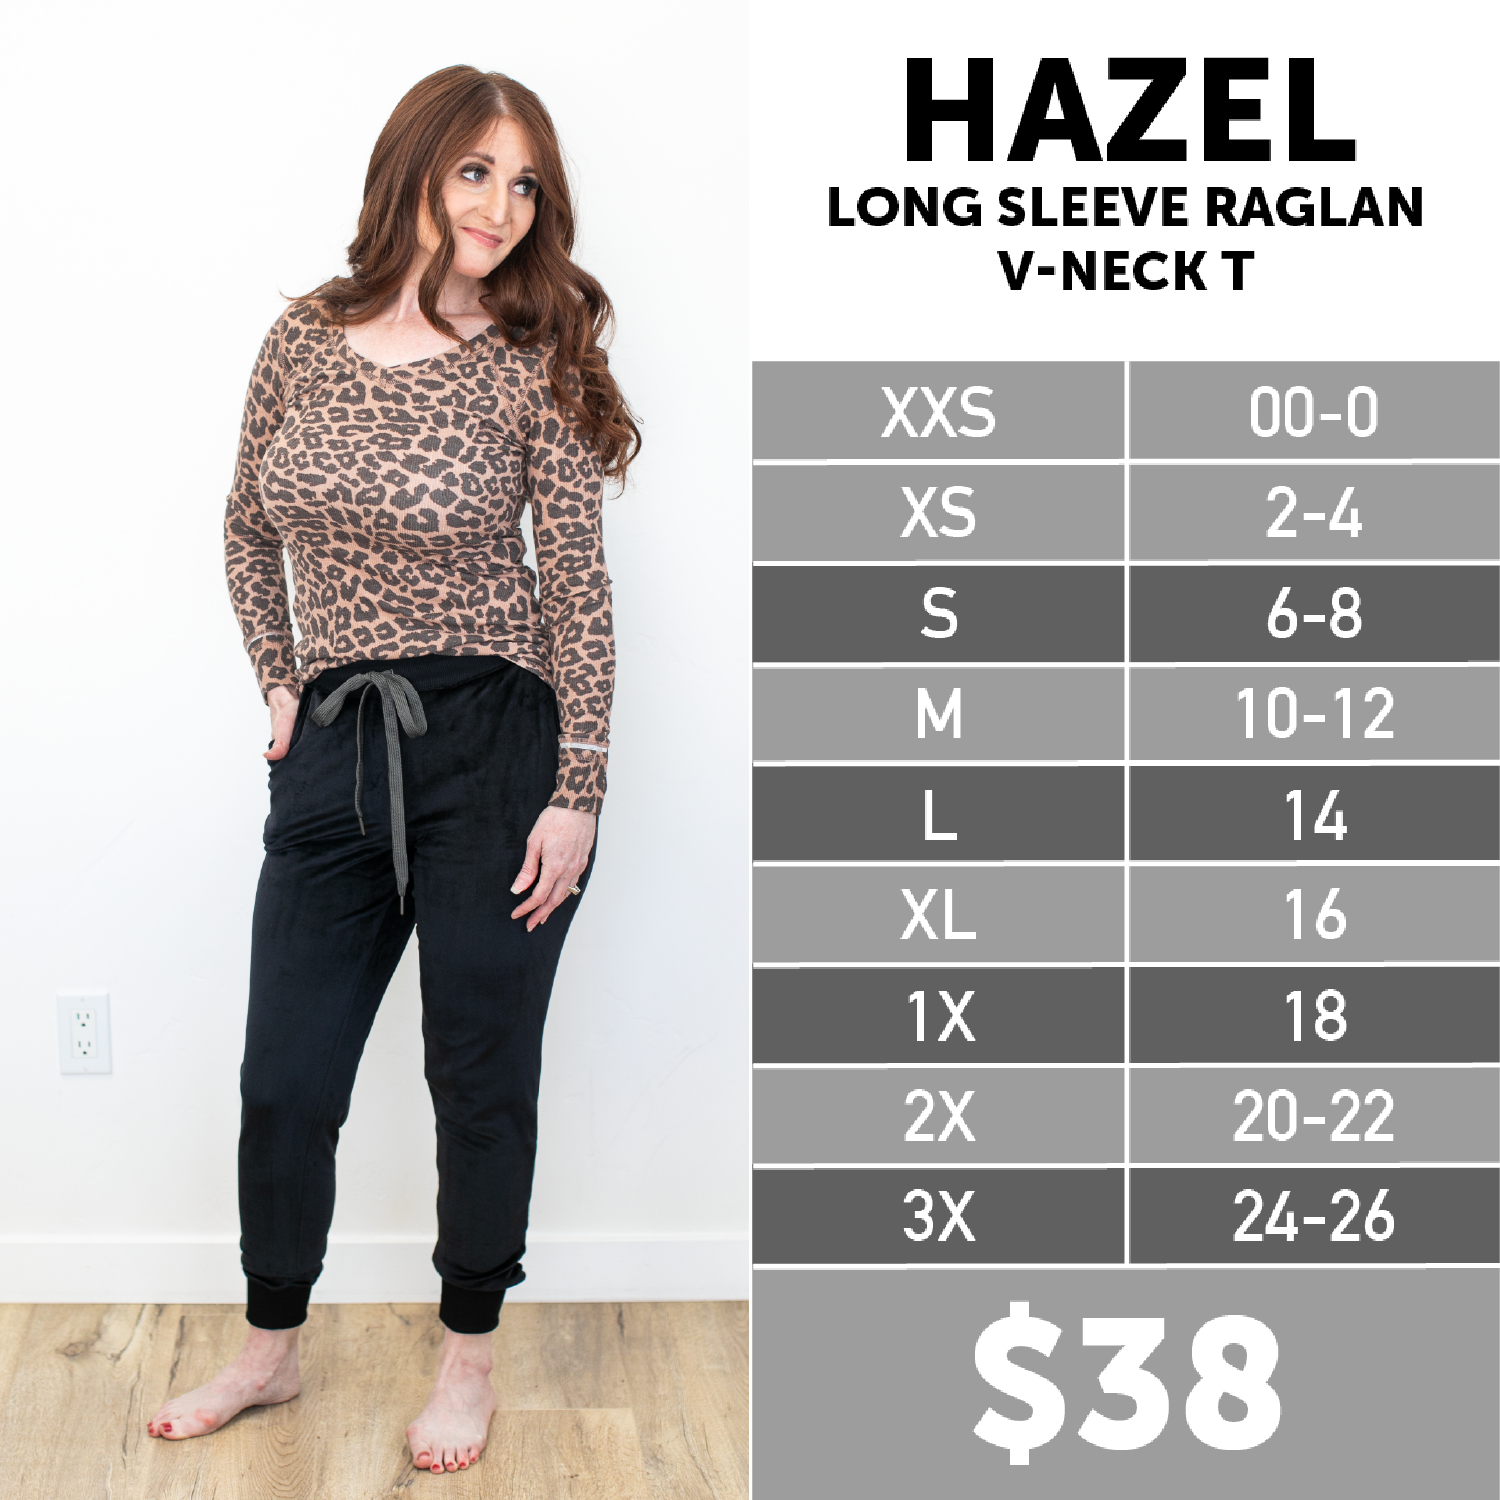 Lularoe Hazel Top (Cozy) Size Chart